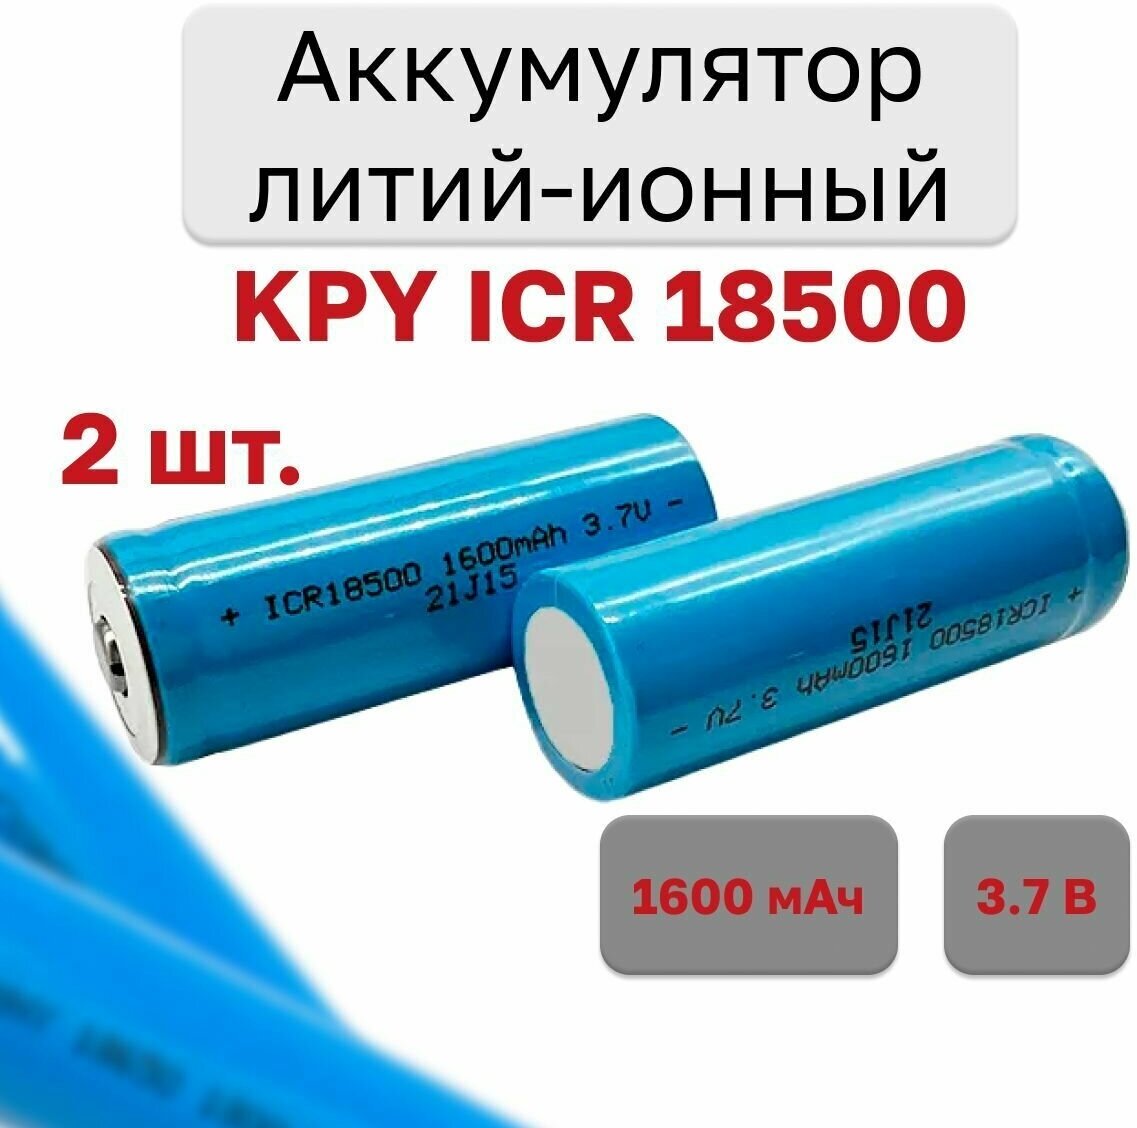 Аккумулятор литий-ионный 18500 KPY ICR 3.7В 1600мАч